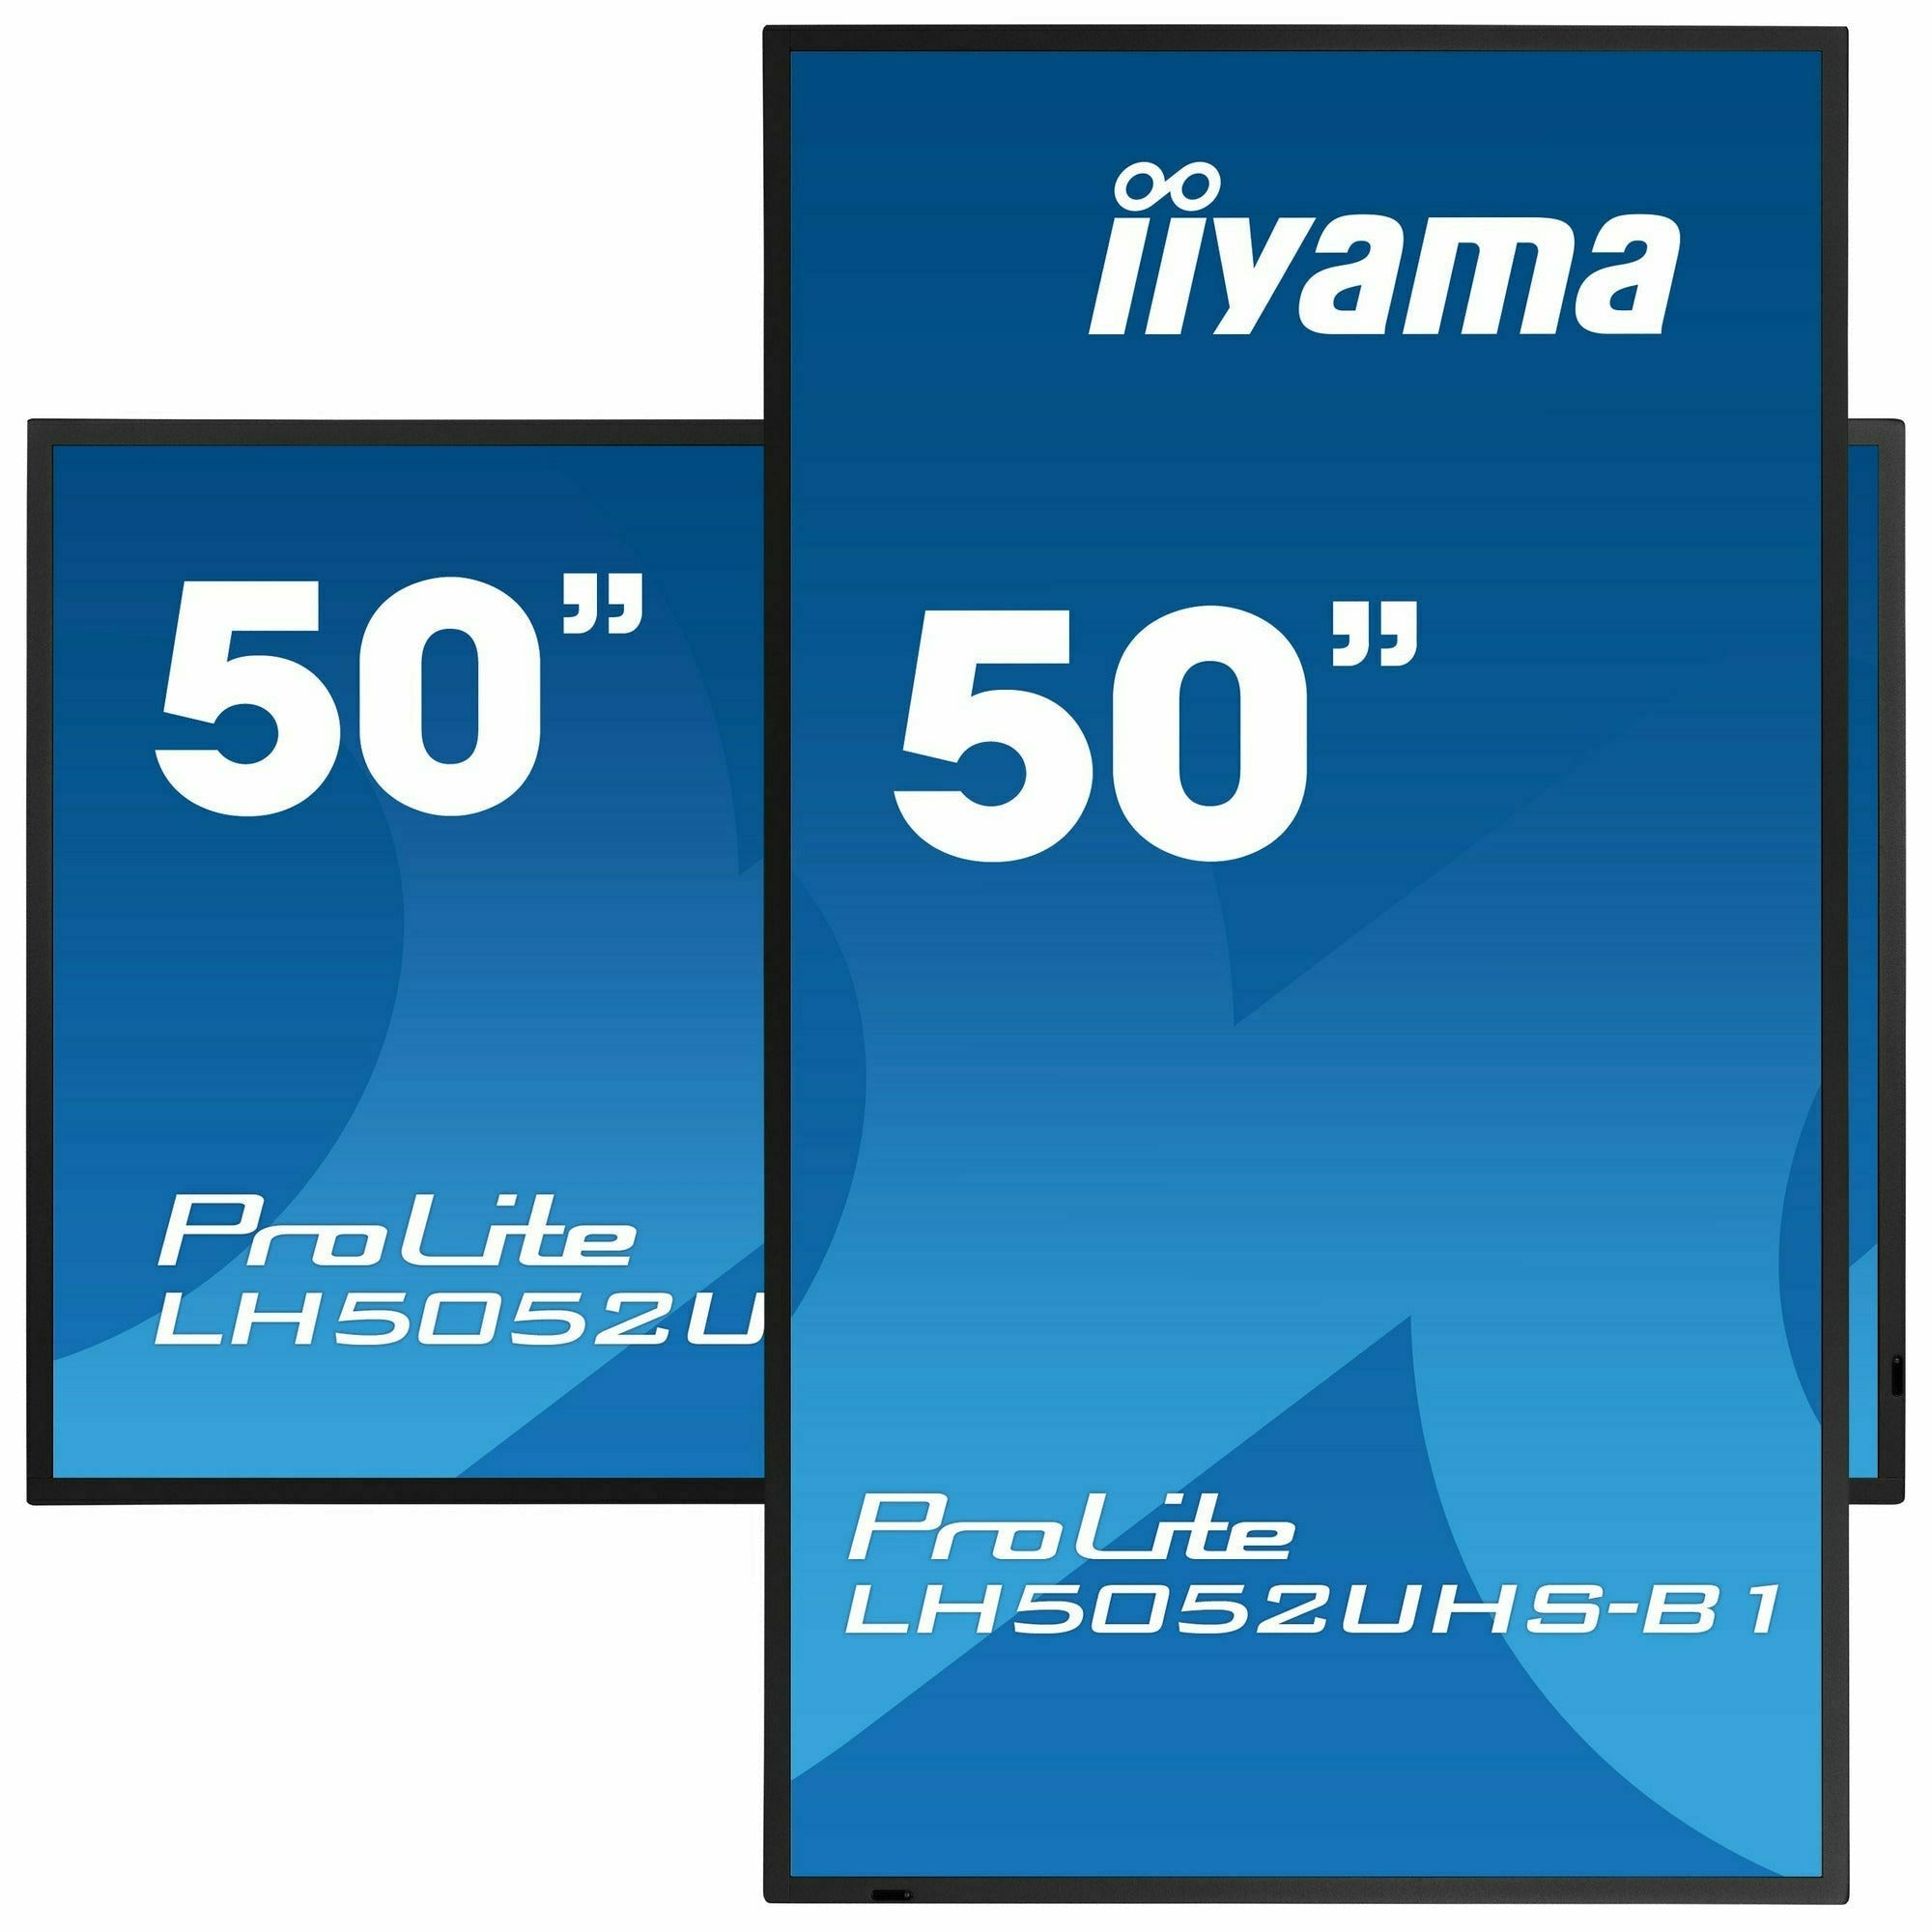 iiyama ProLite LH5052UHS-B1 50" LFD